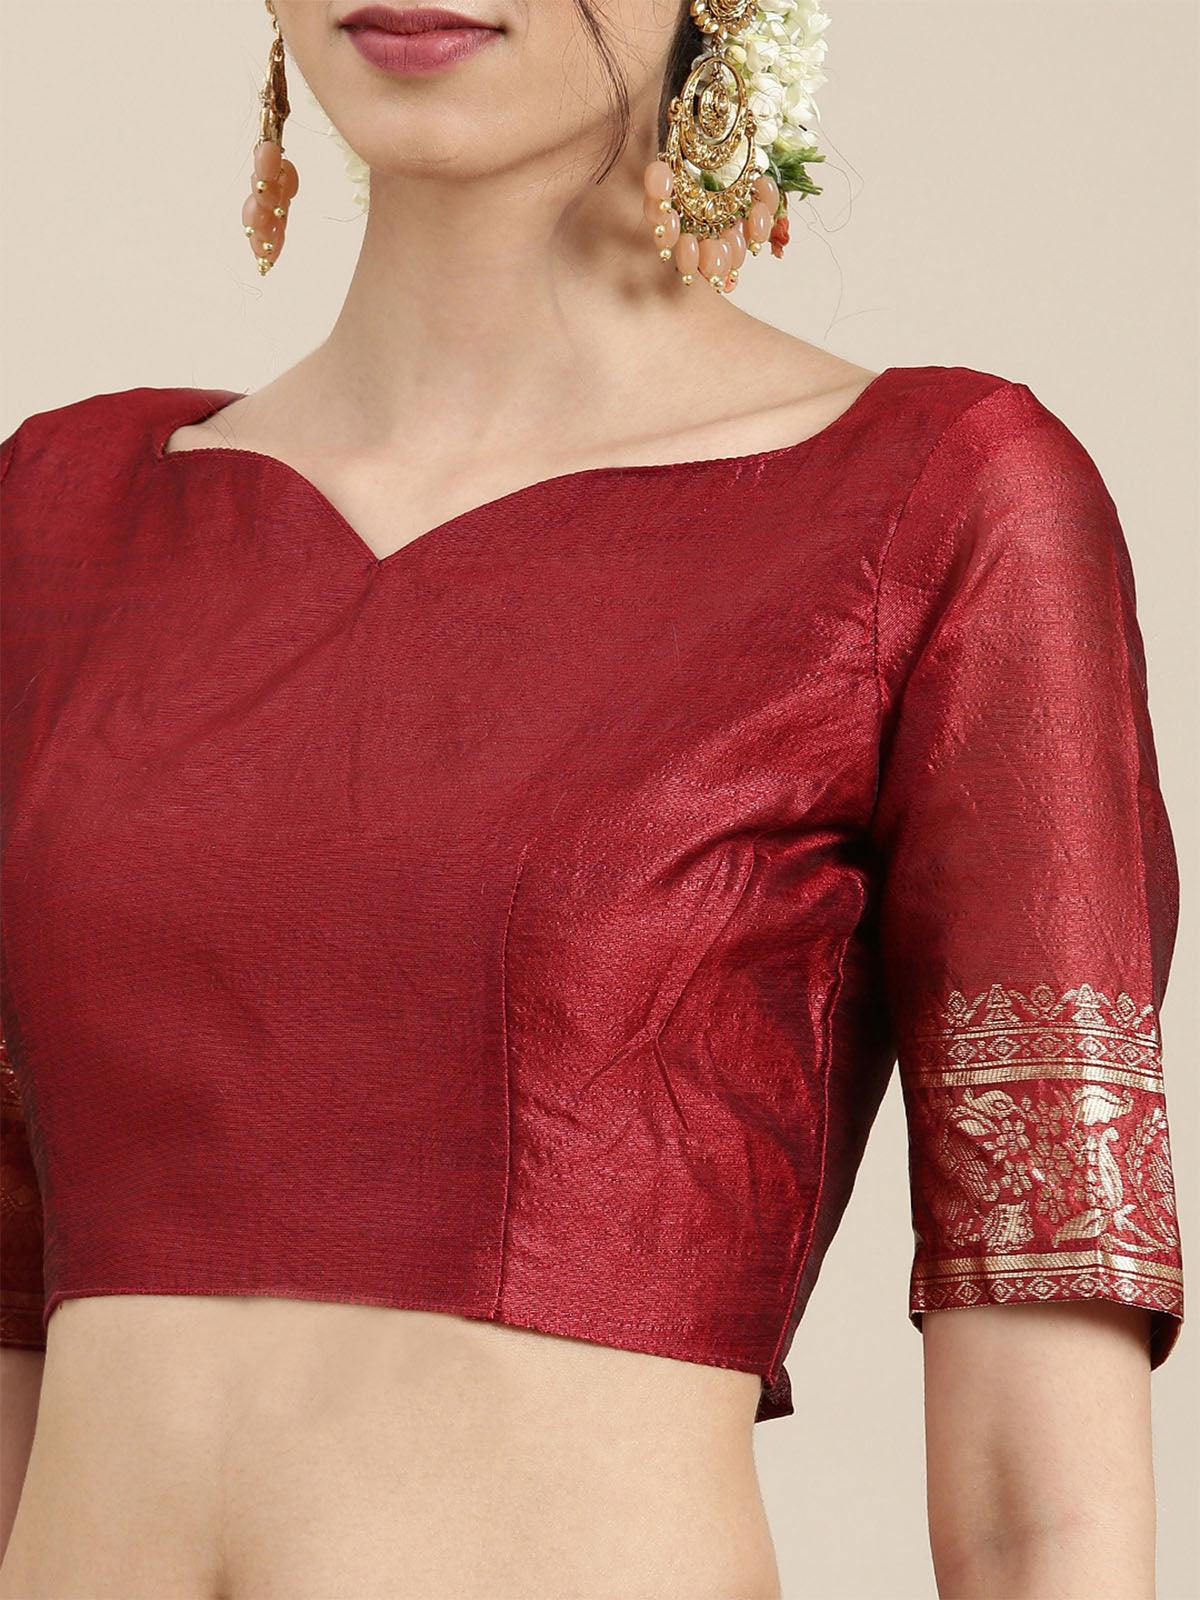 Women's Silk Blend Maroon Woven Design Celebrity Saree With Blouse Piece - Odette